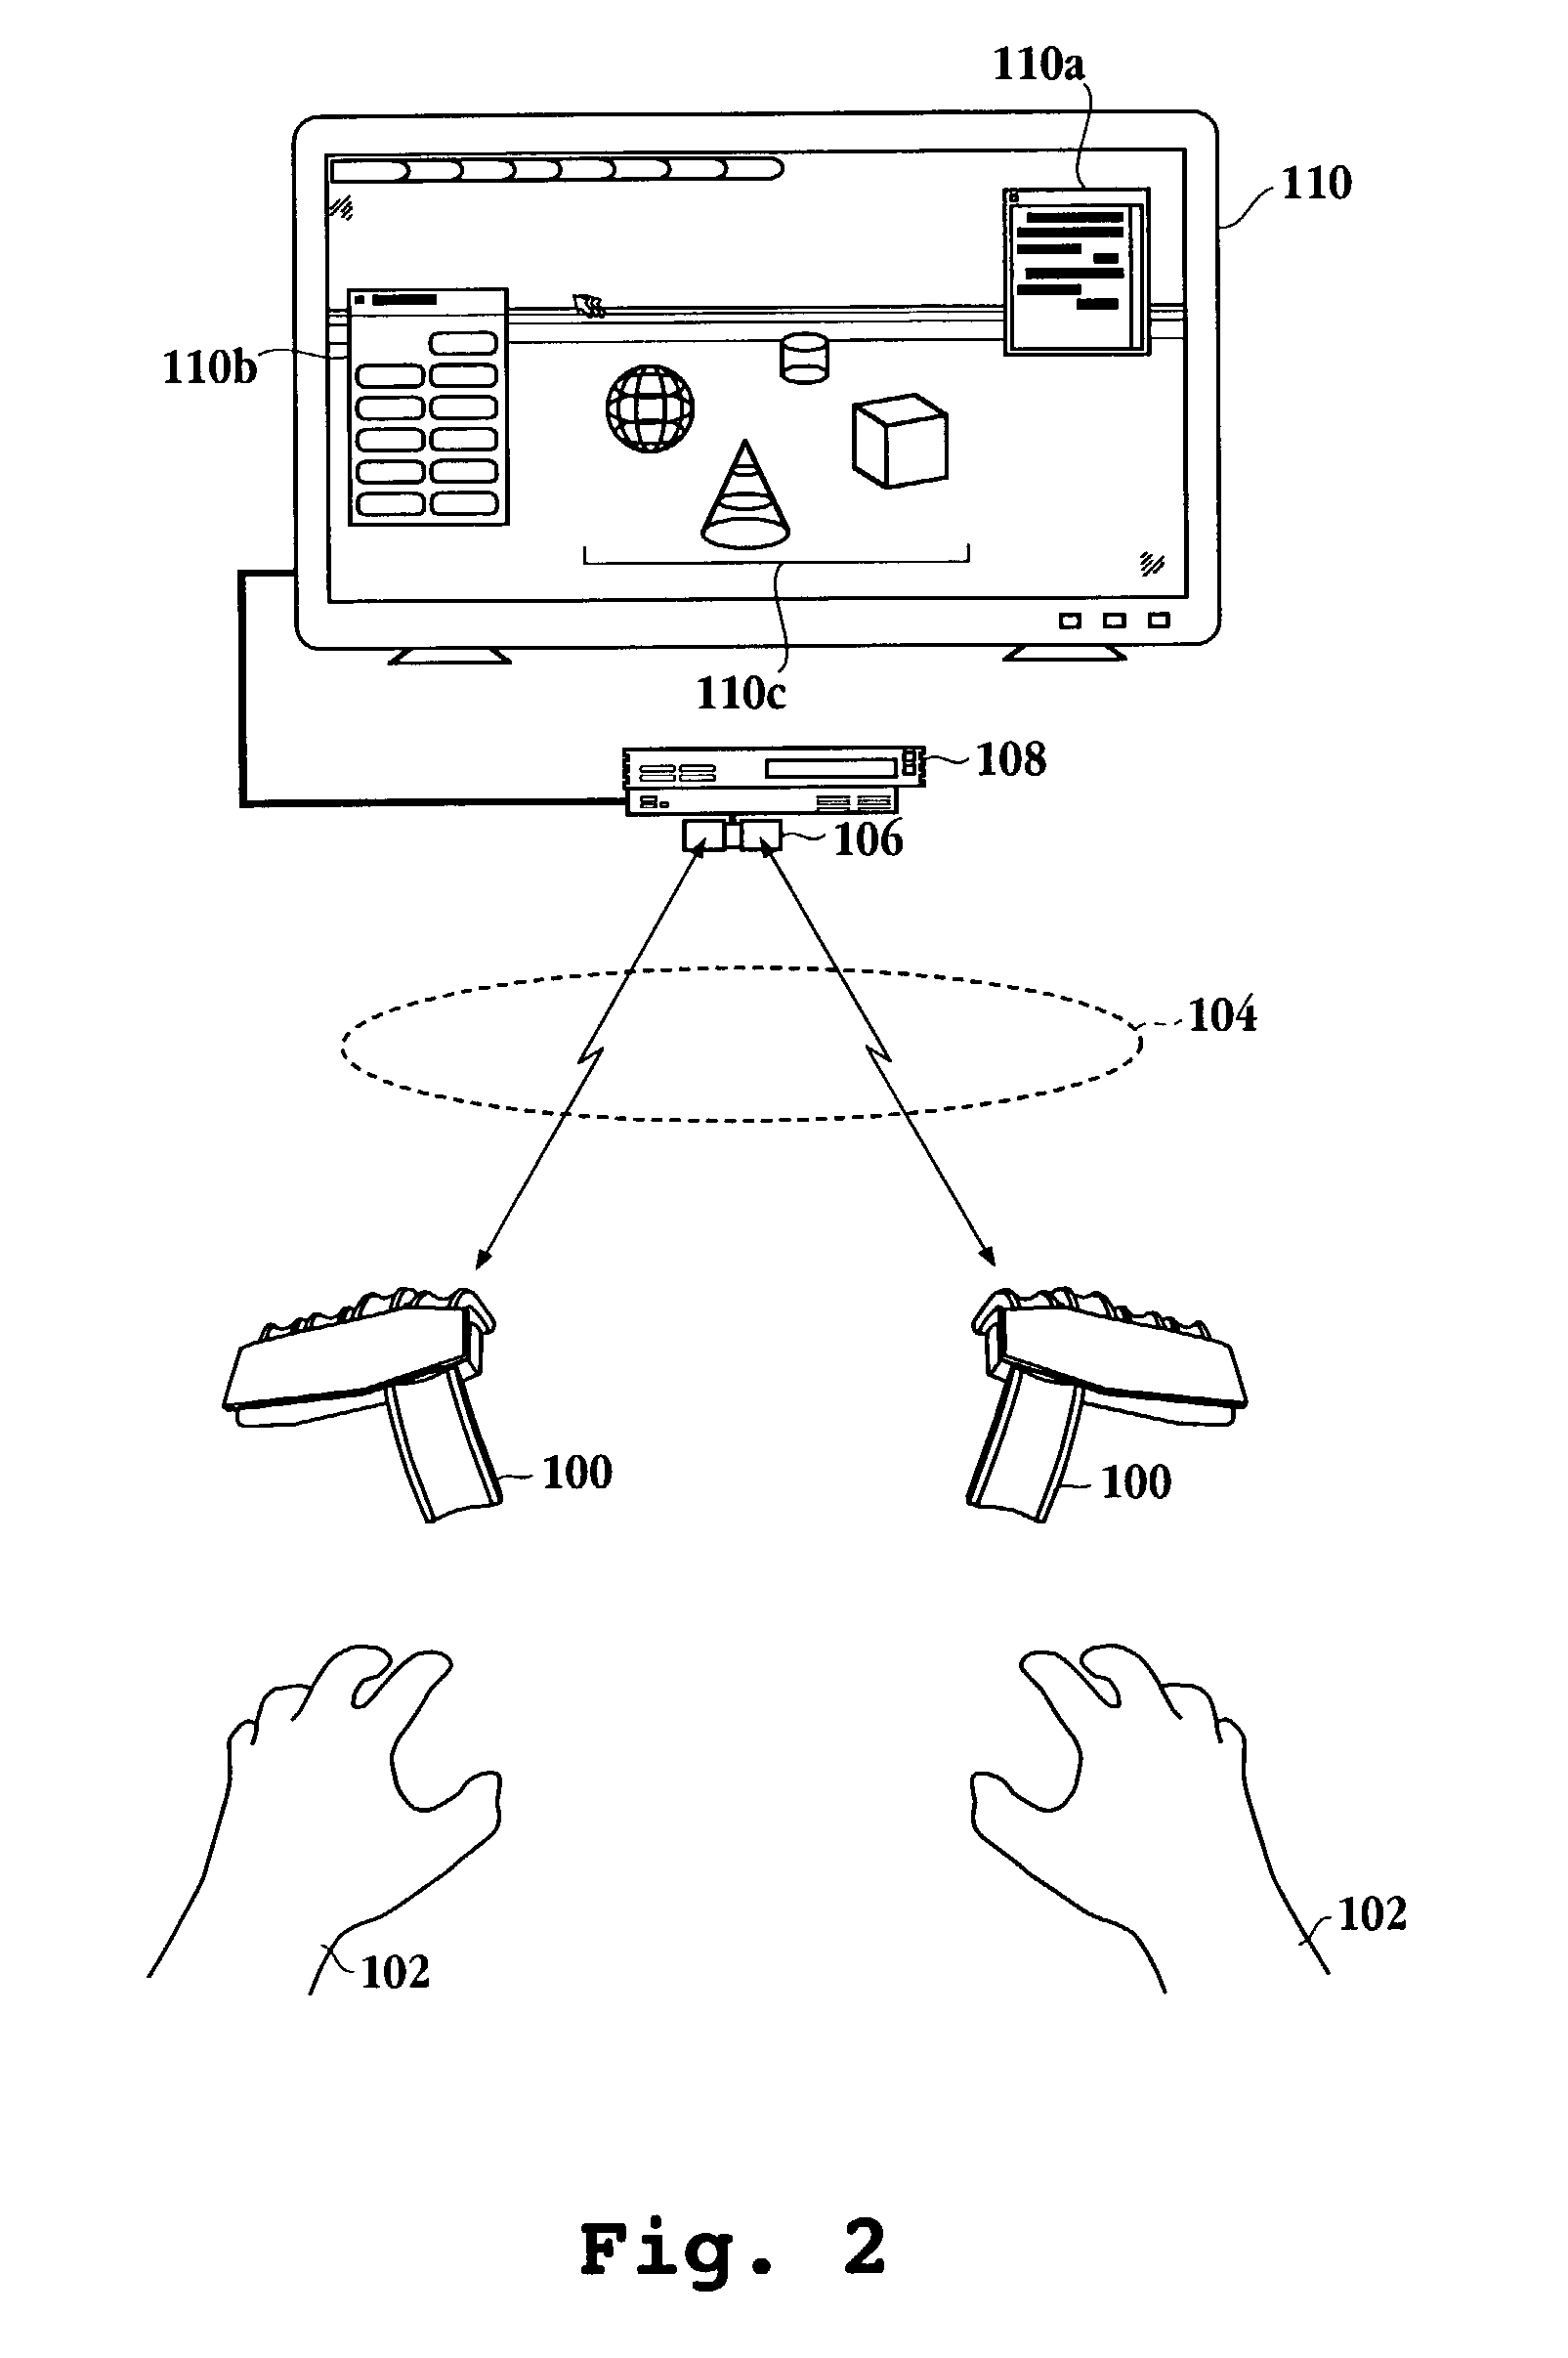 Hand-held computer interactive device